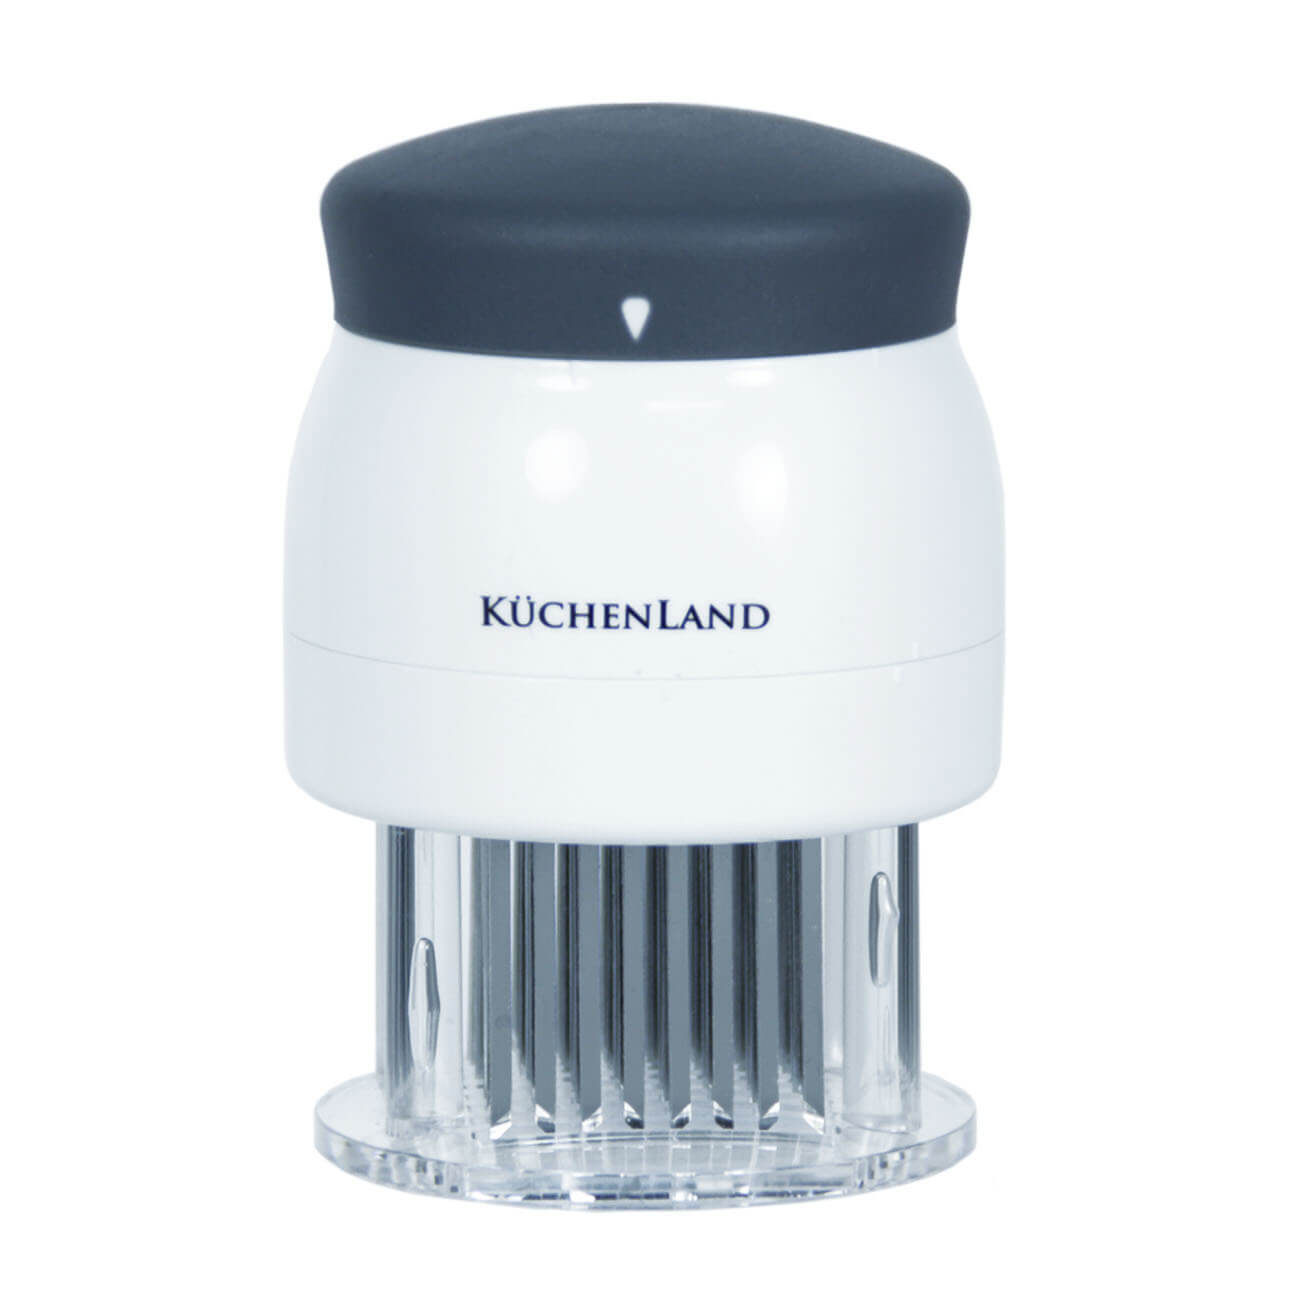 Kuchenland Тендерайзер, 8х11 см, 72 лезвия, сталь/пластик, белый, Grinding лезвия yoko 25 мм 10 шт